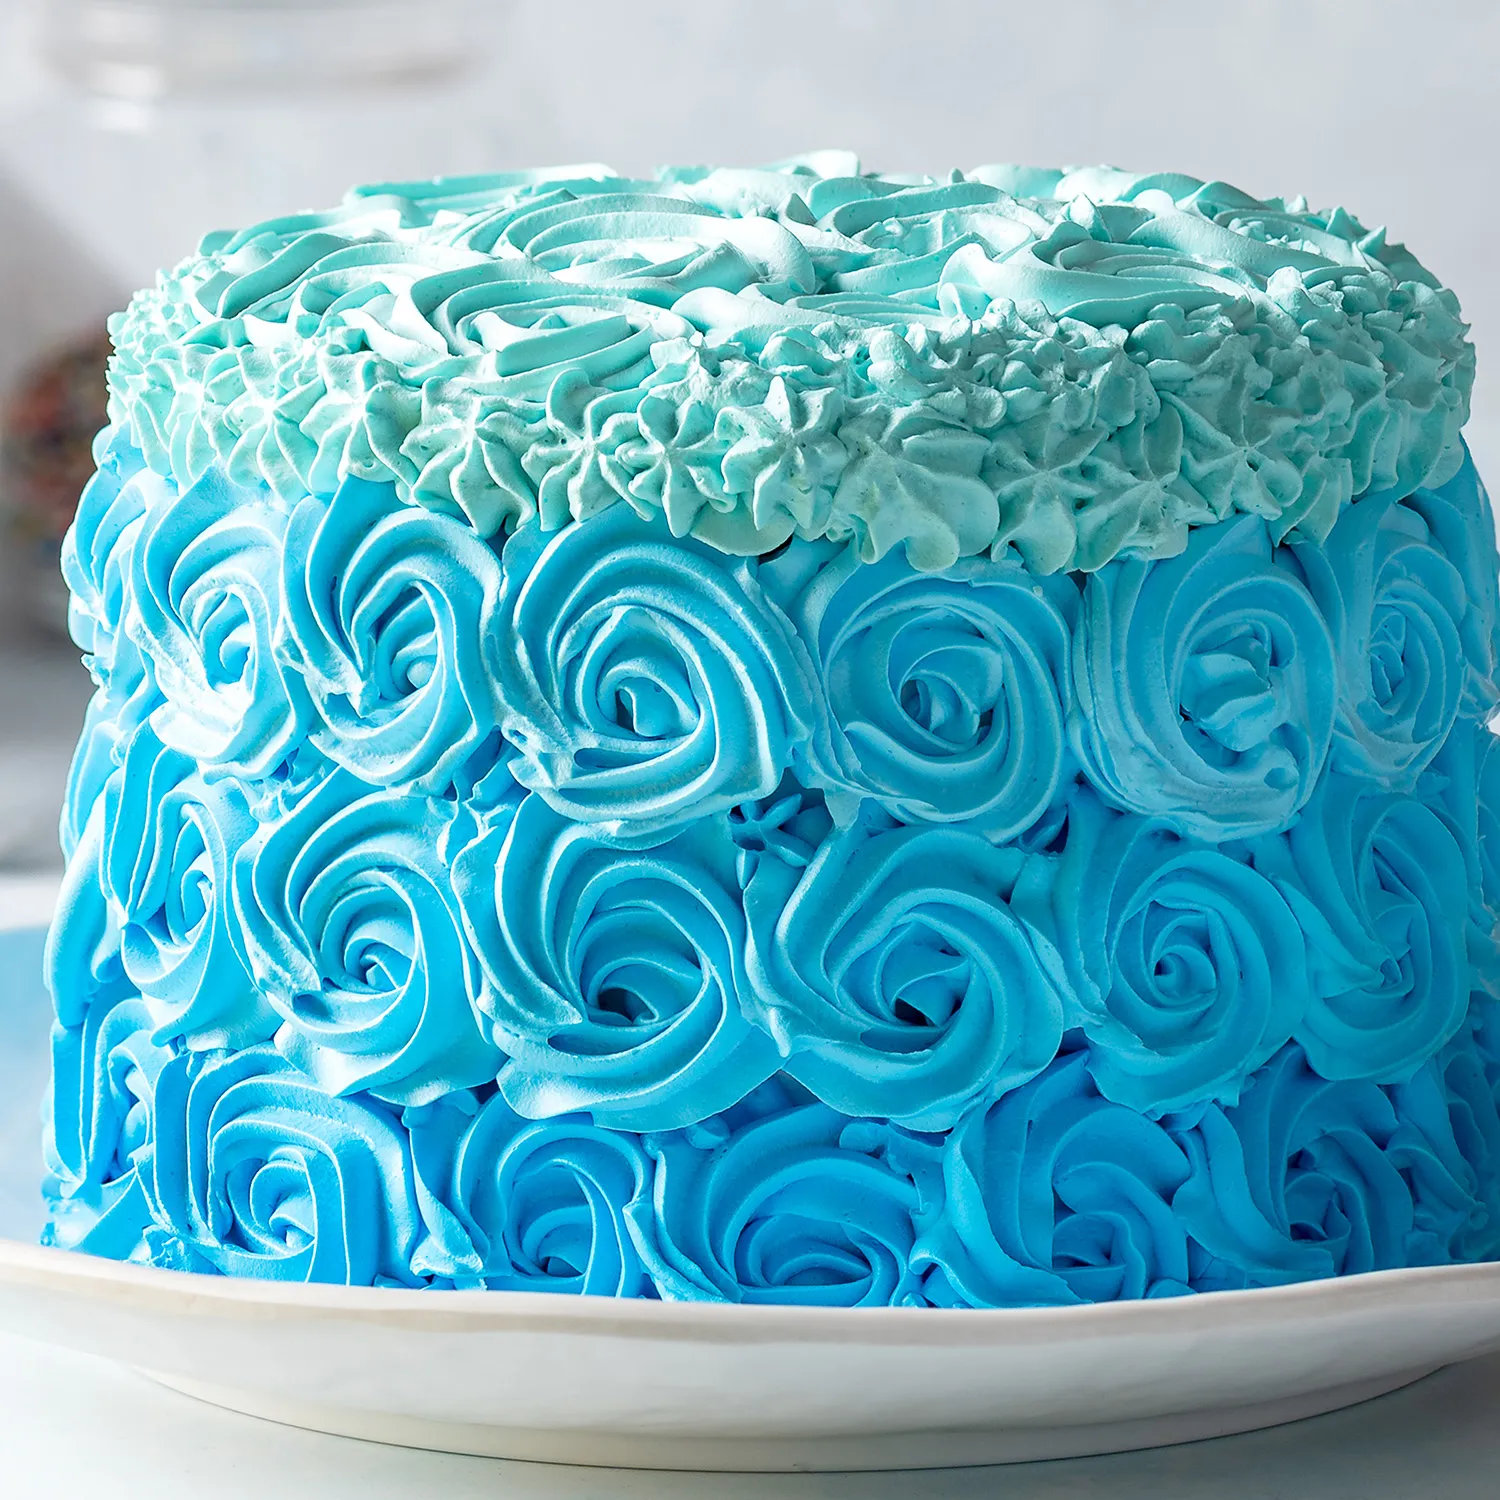 Blue Roses Designer Chocolate Cake - 2 KG